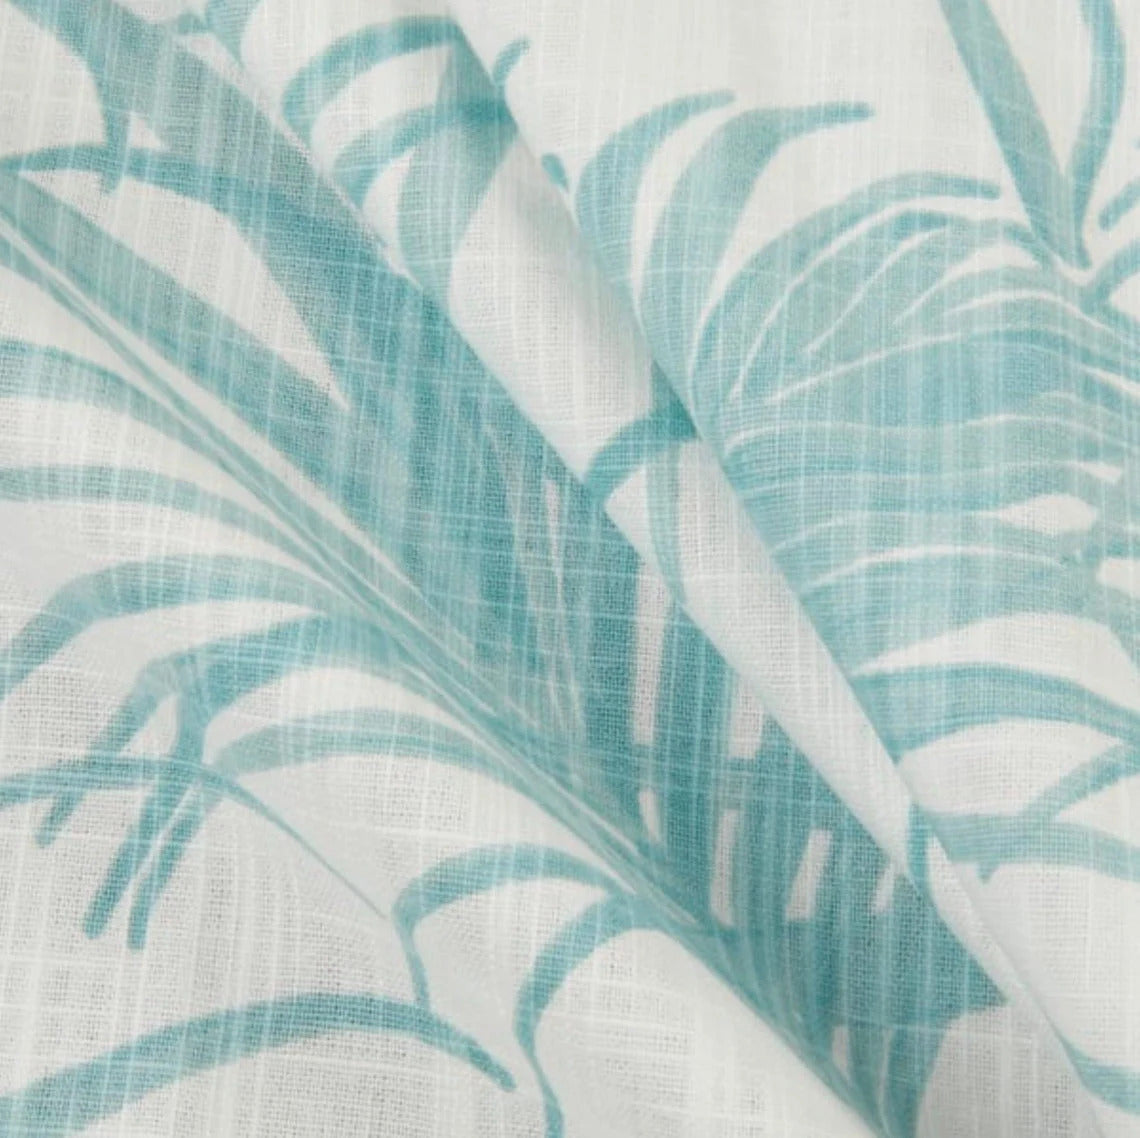 pillow sham in karoo cancun blue watercolor tropical foliage